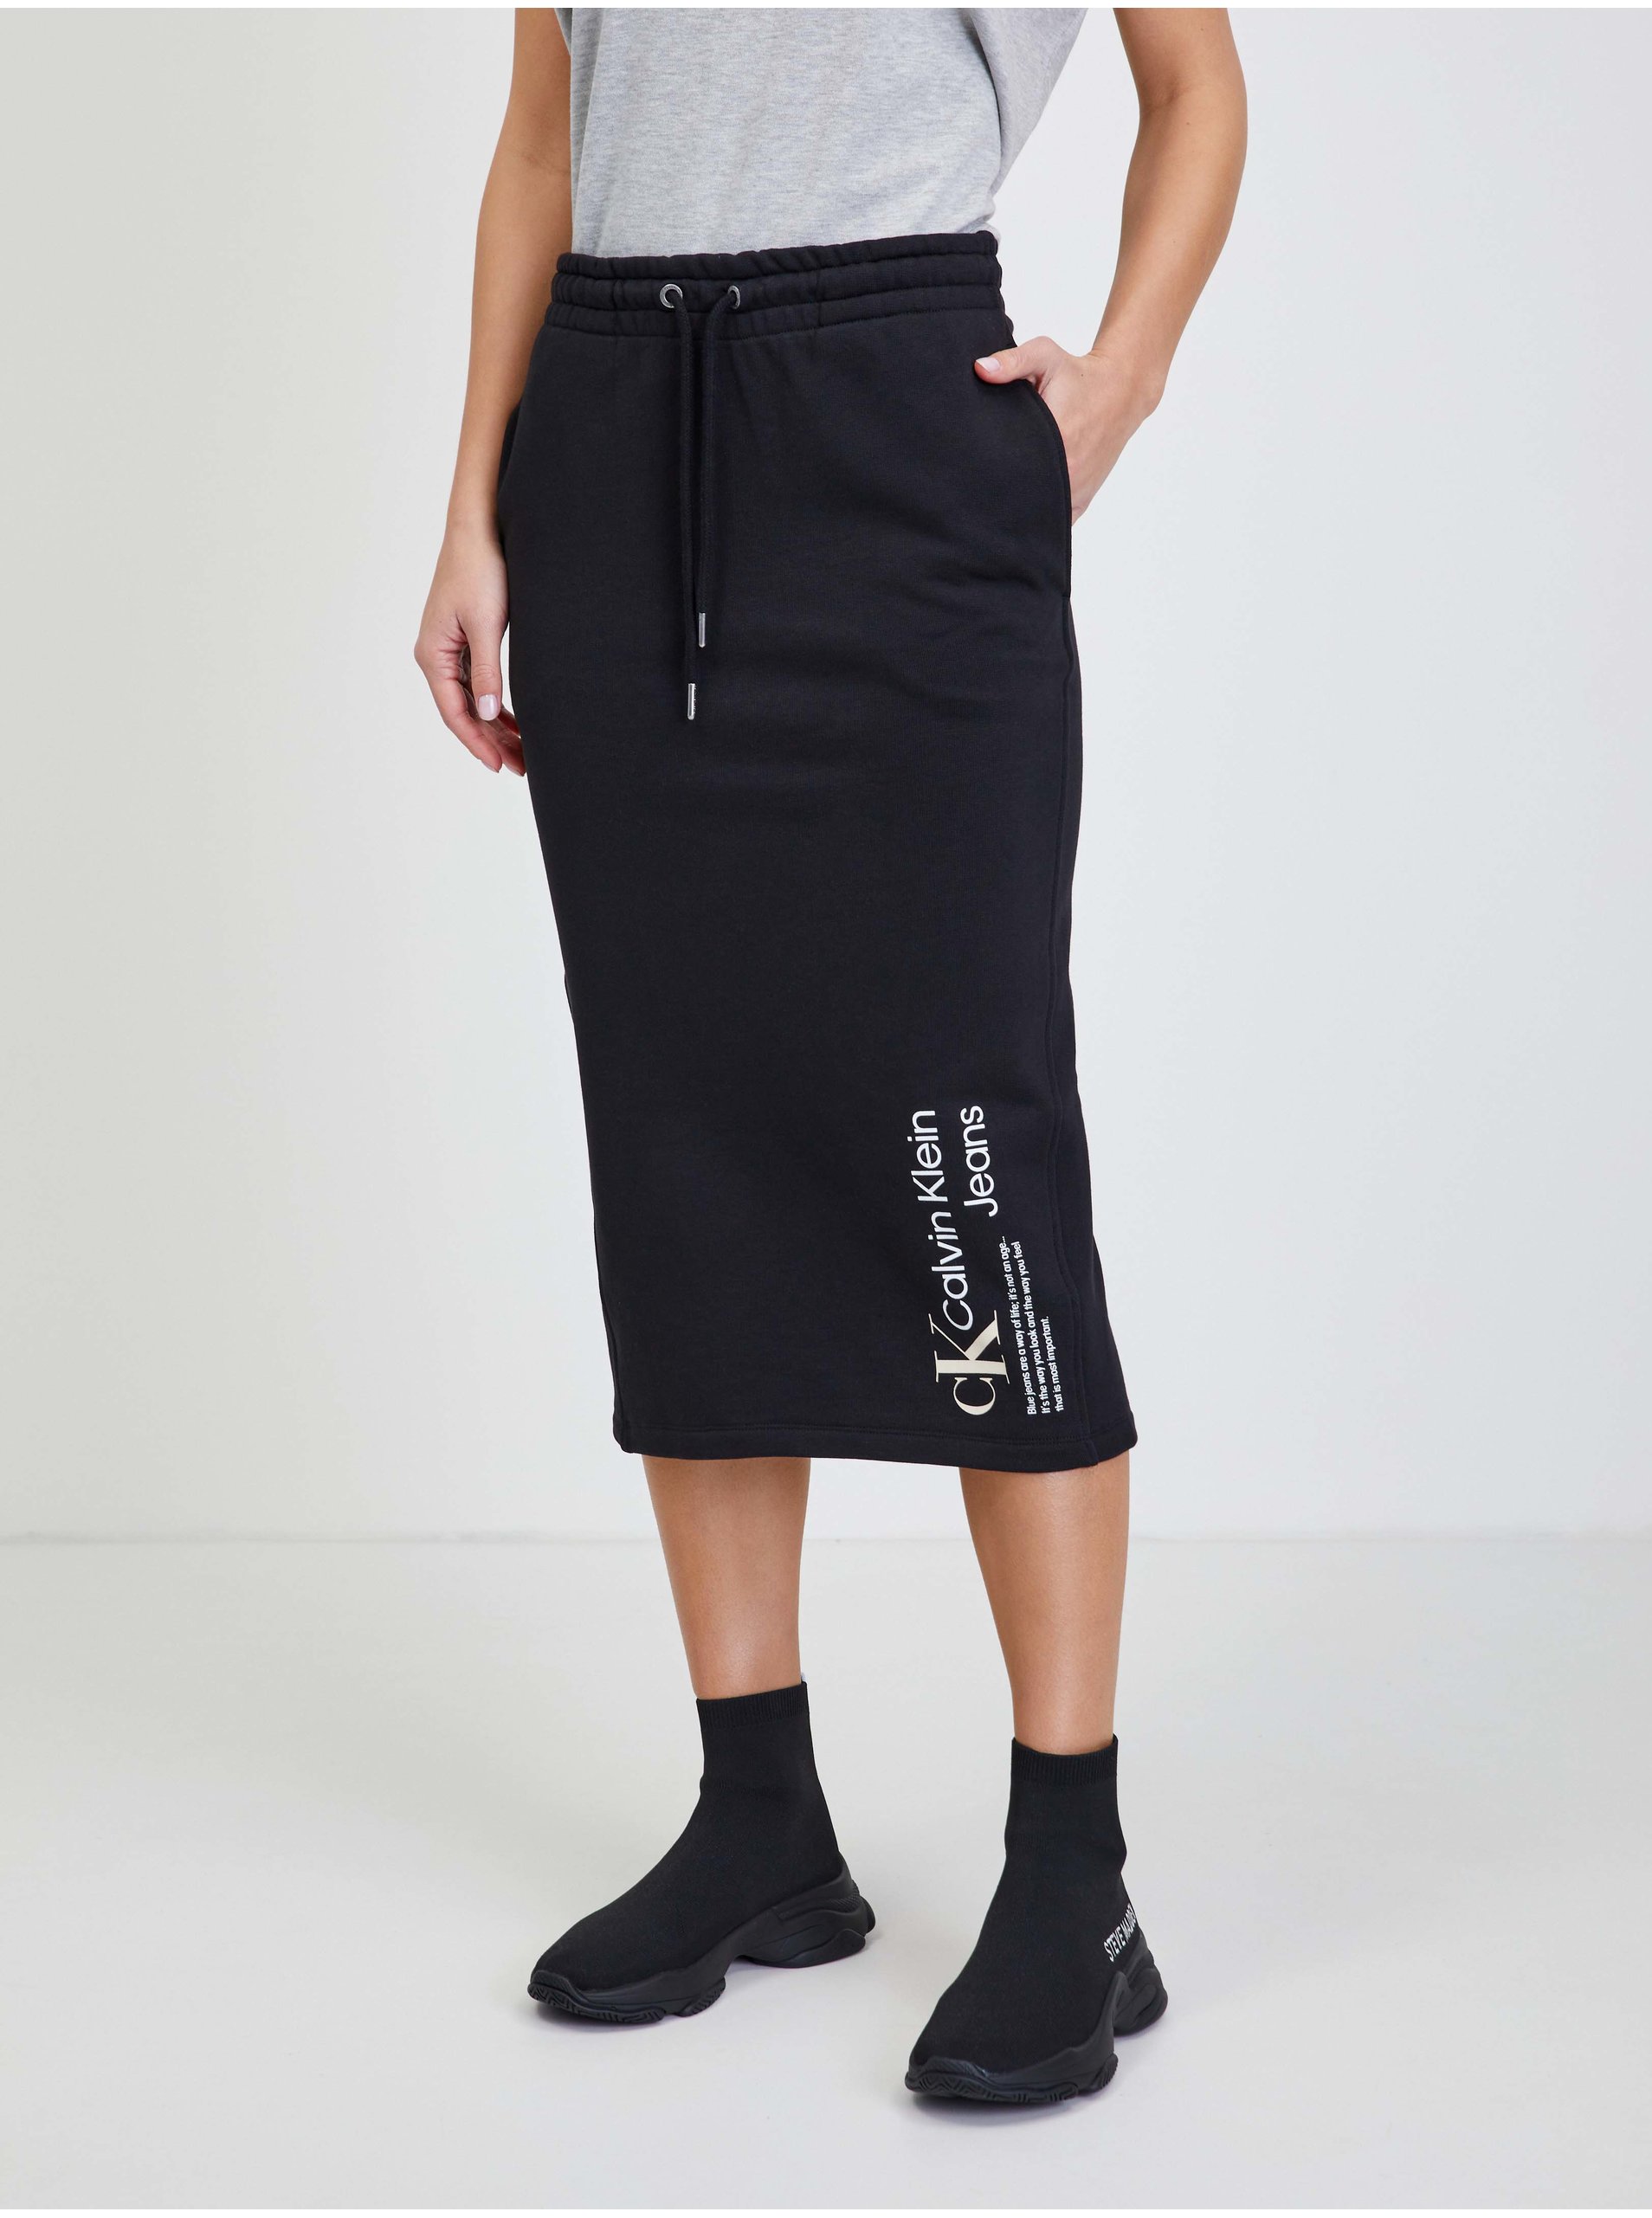 Black Ladies Tracksuit Midi Skirt With Slit Calvin Klein Jeans - Ladies